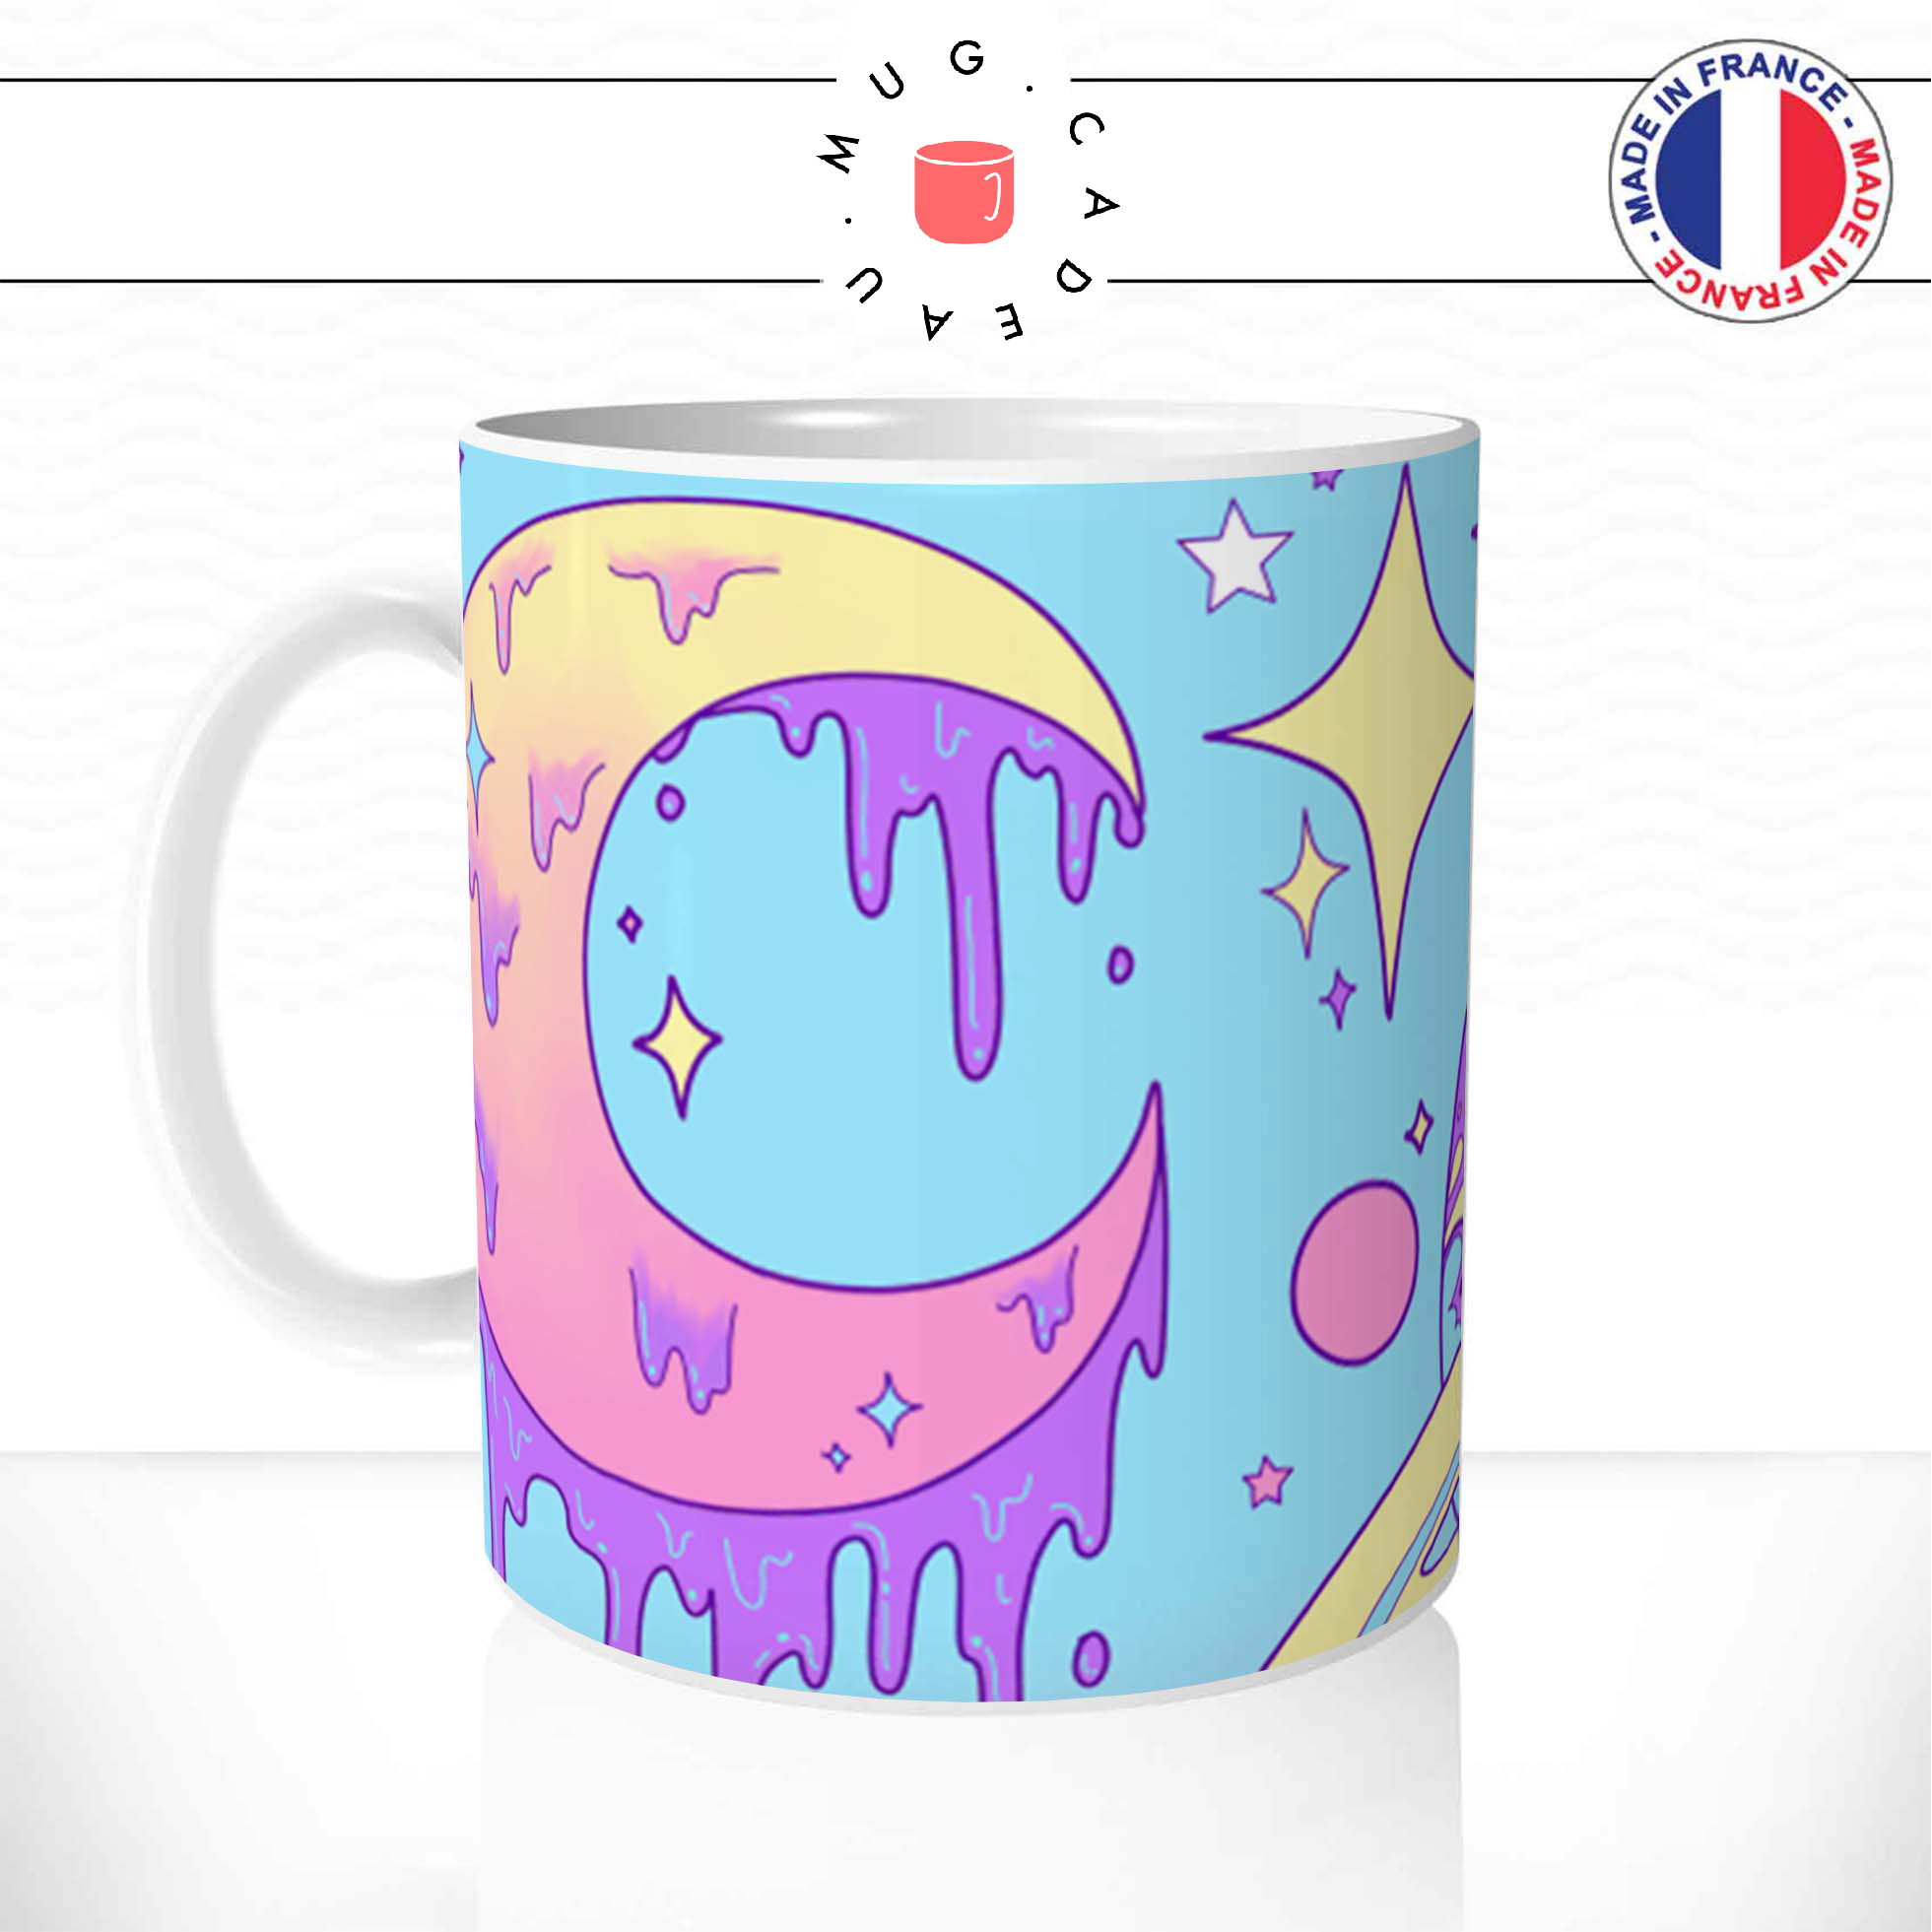 mug-tasse-ref7-formes-geometriques-image-planete-univers-espace-dessin-cafe-the-mugs-tasses-personnalise-anse-gauche